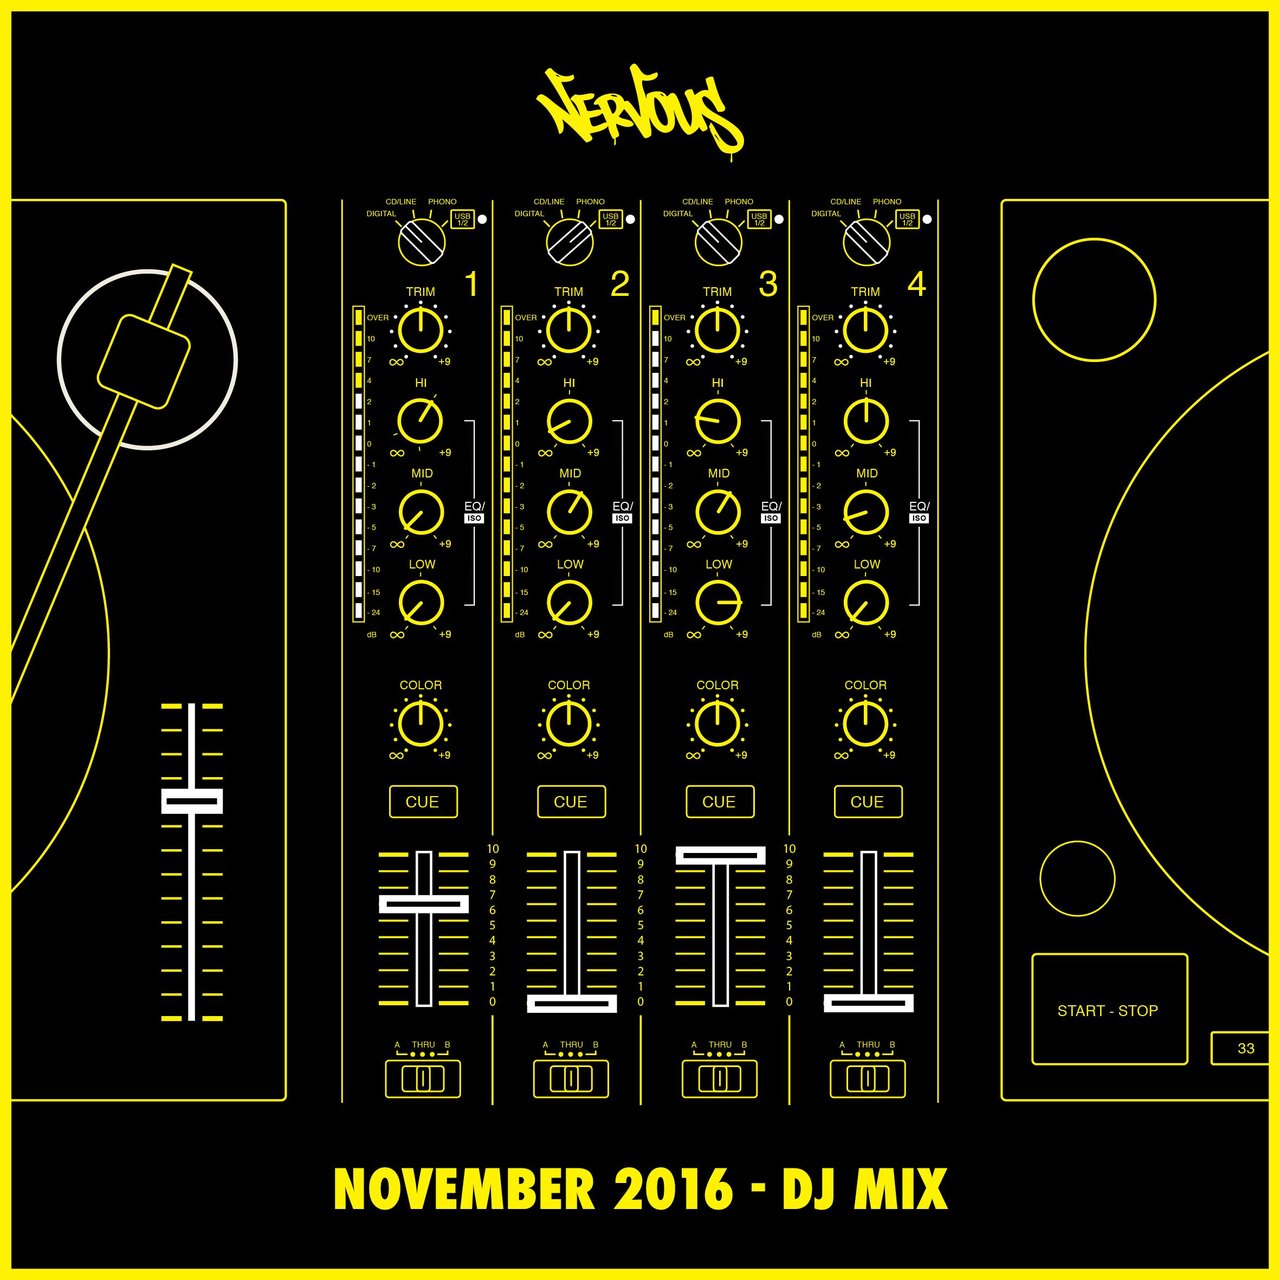 VA - Nervous November 2016 - DJ Mix / 091012 401961